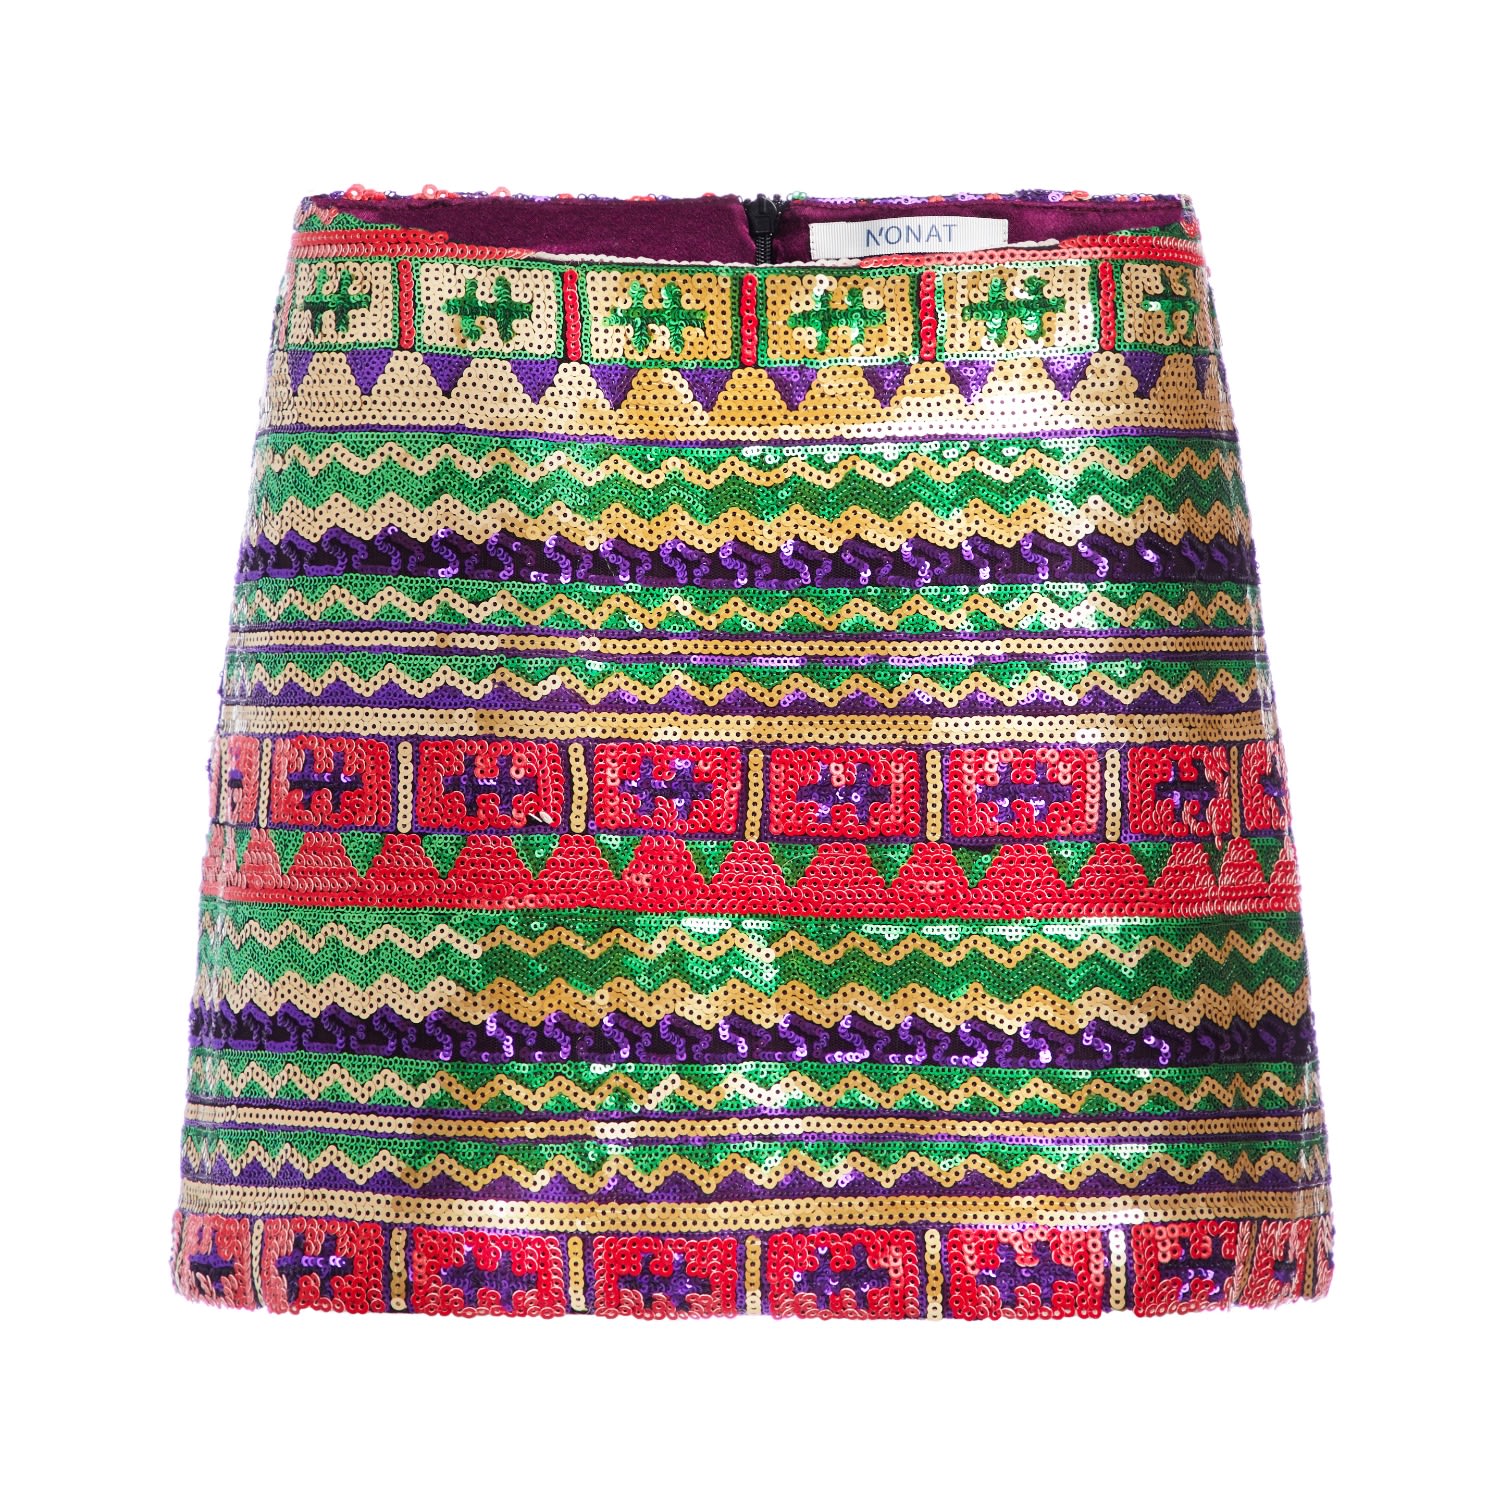 N'onat Women's Lolita Sequin Party Mini Skirt In Multi